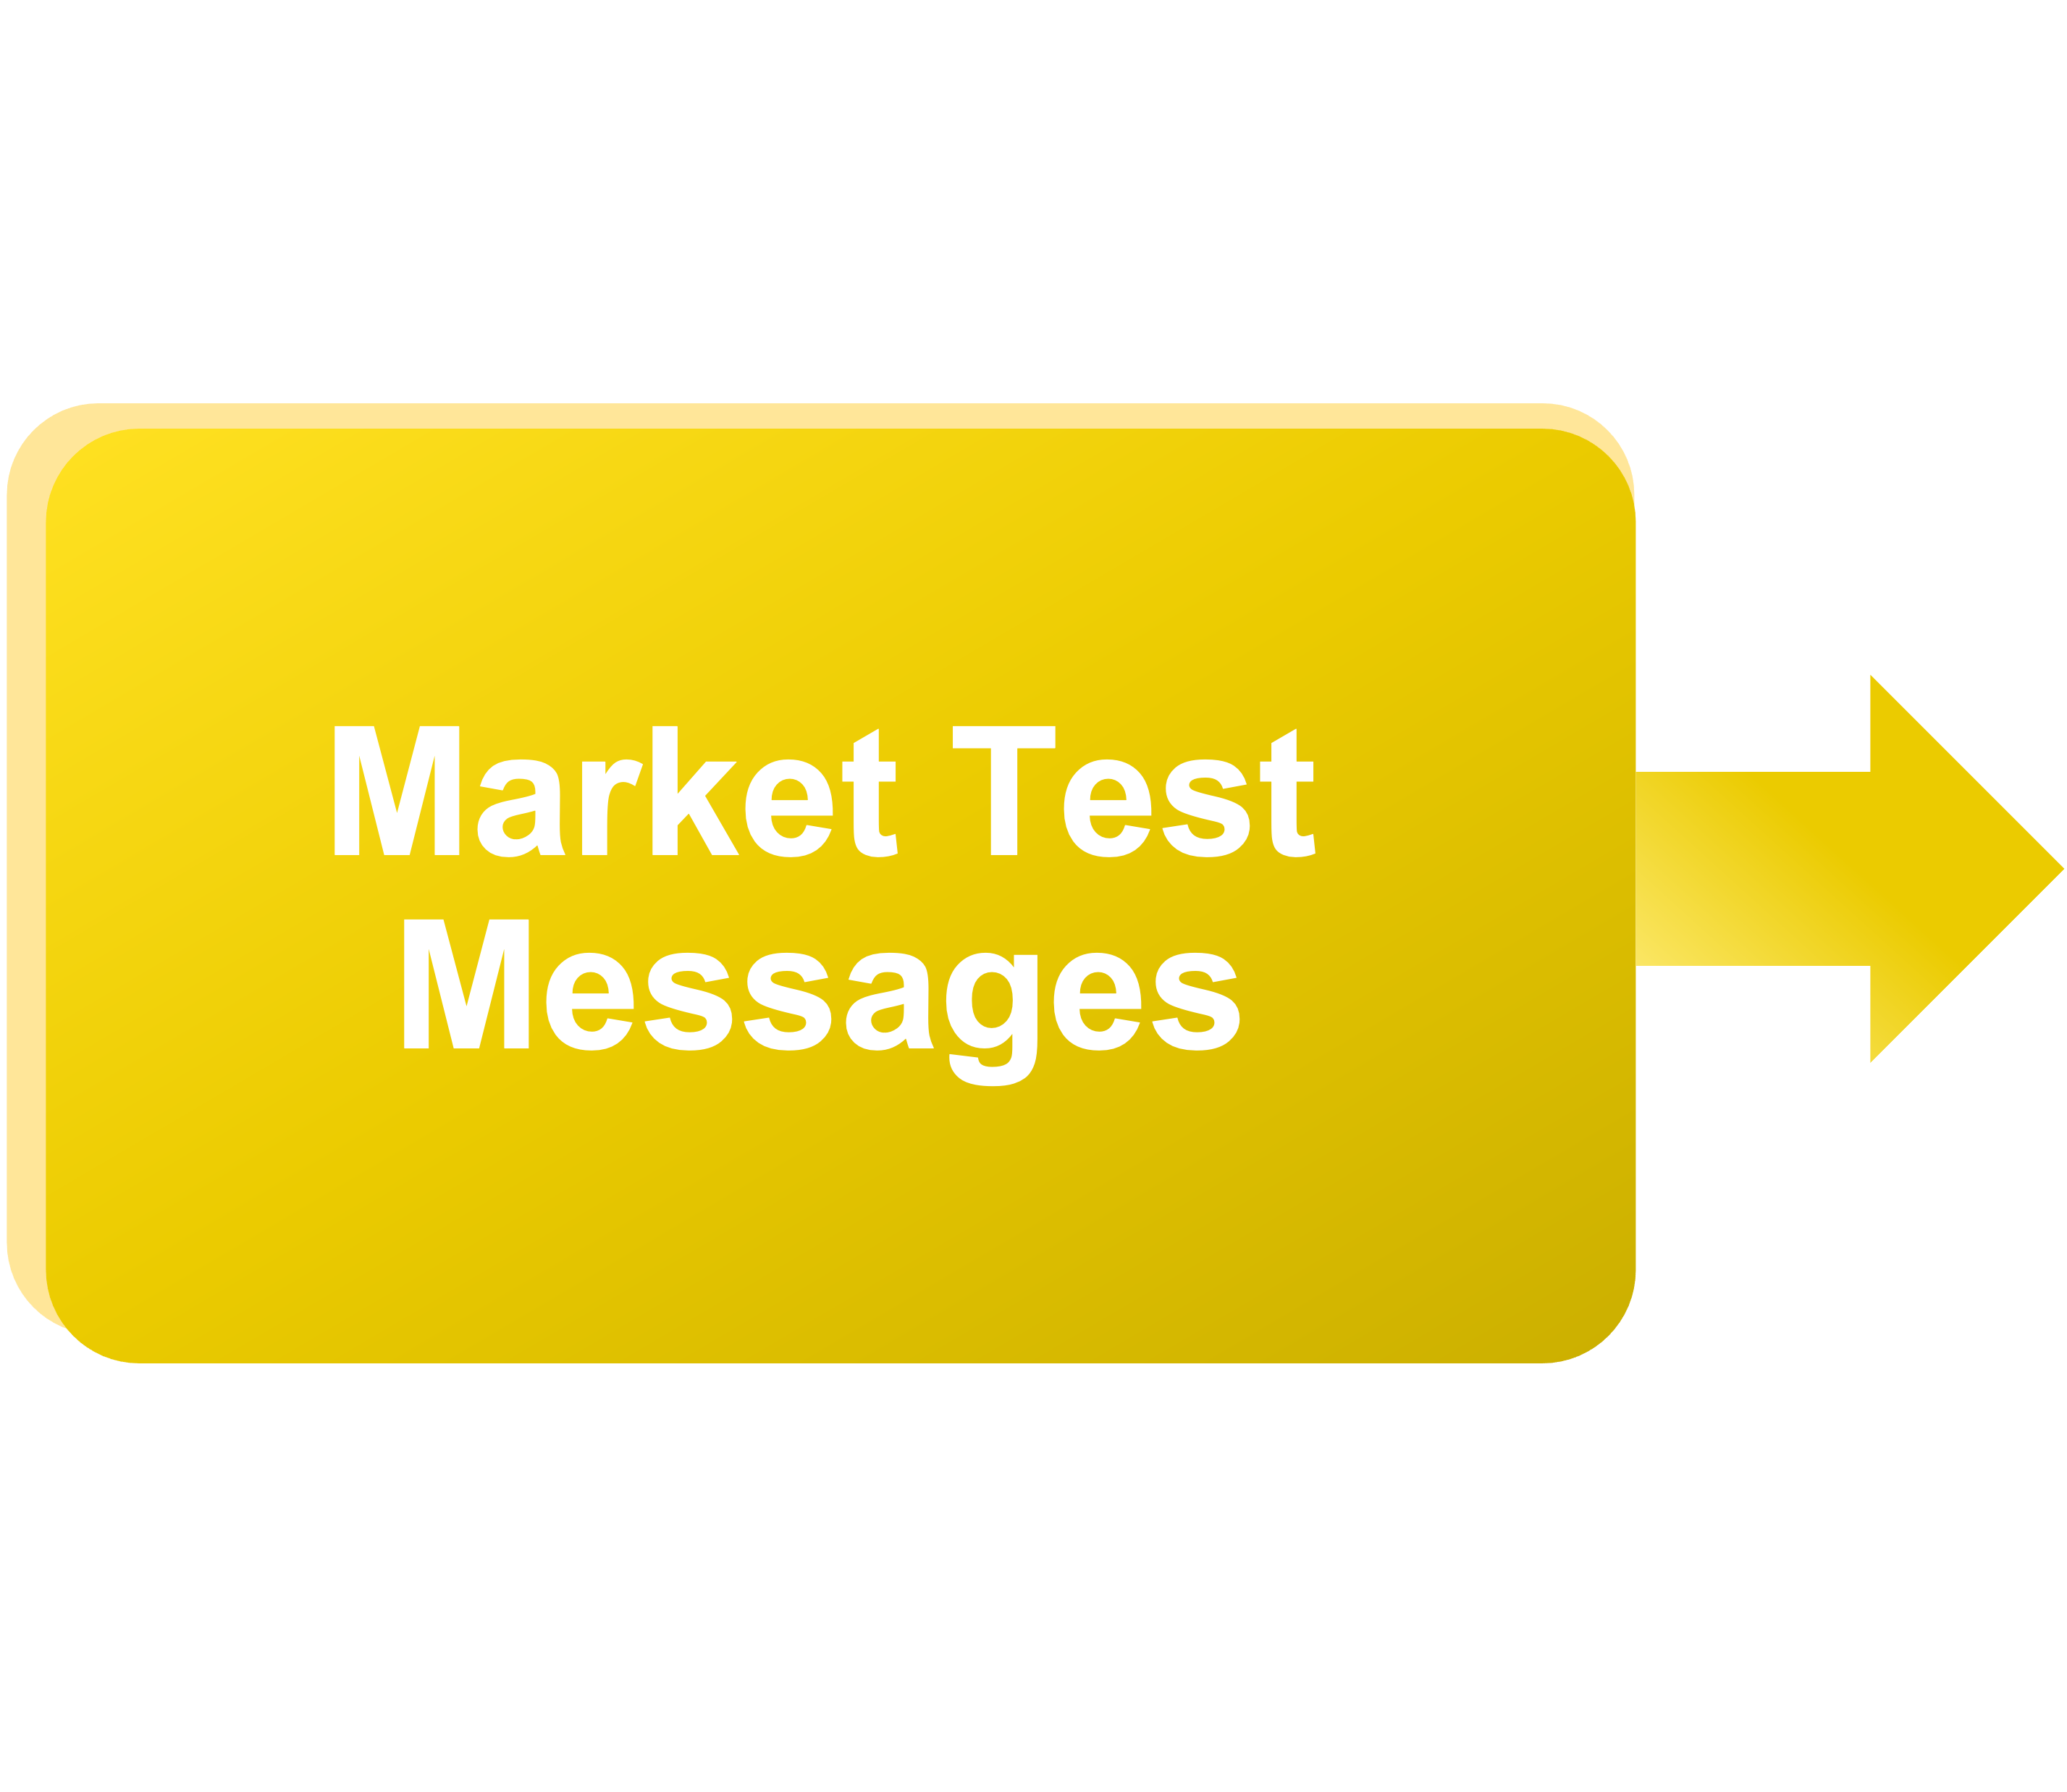 Market Test Messages